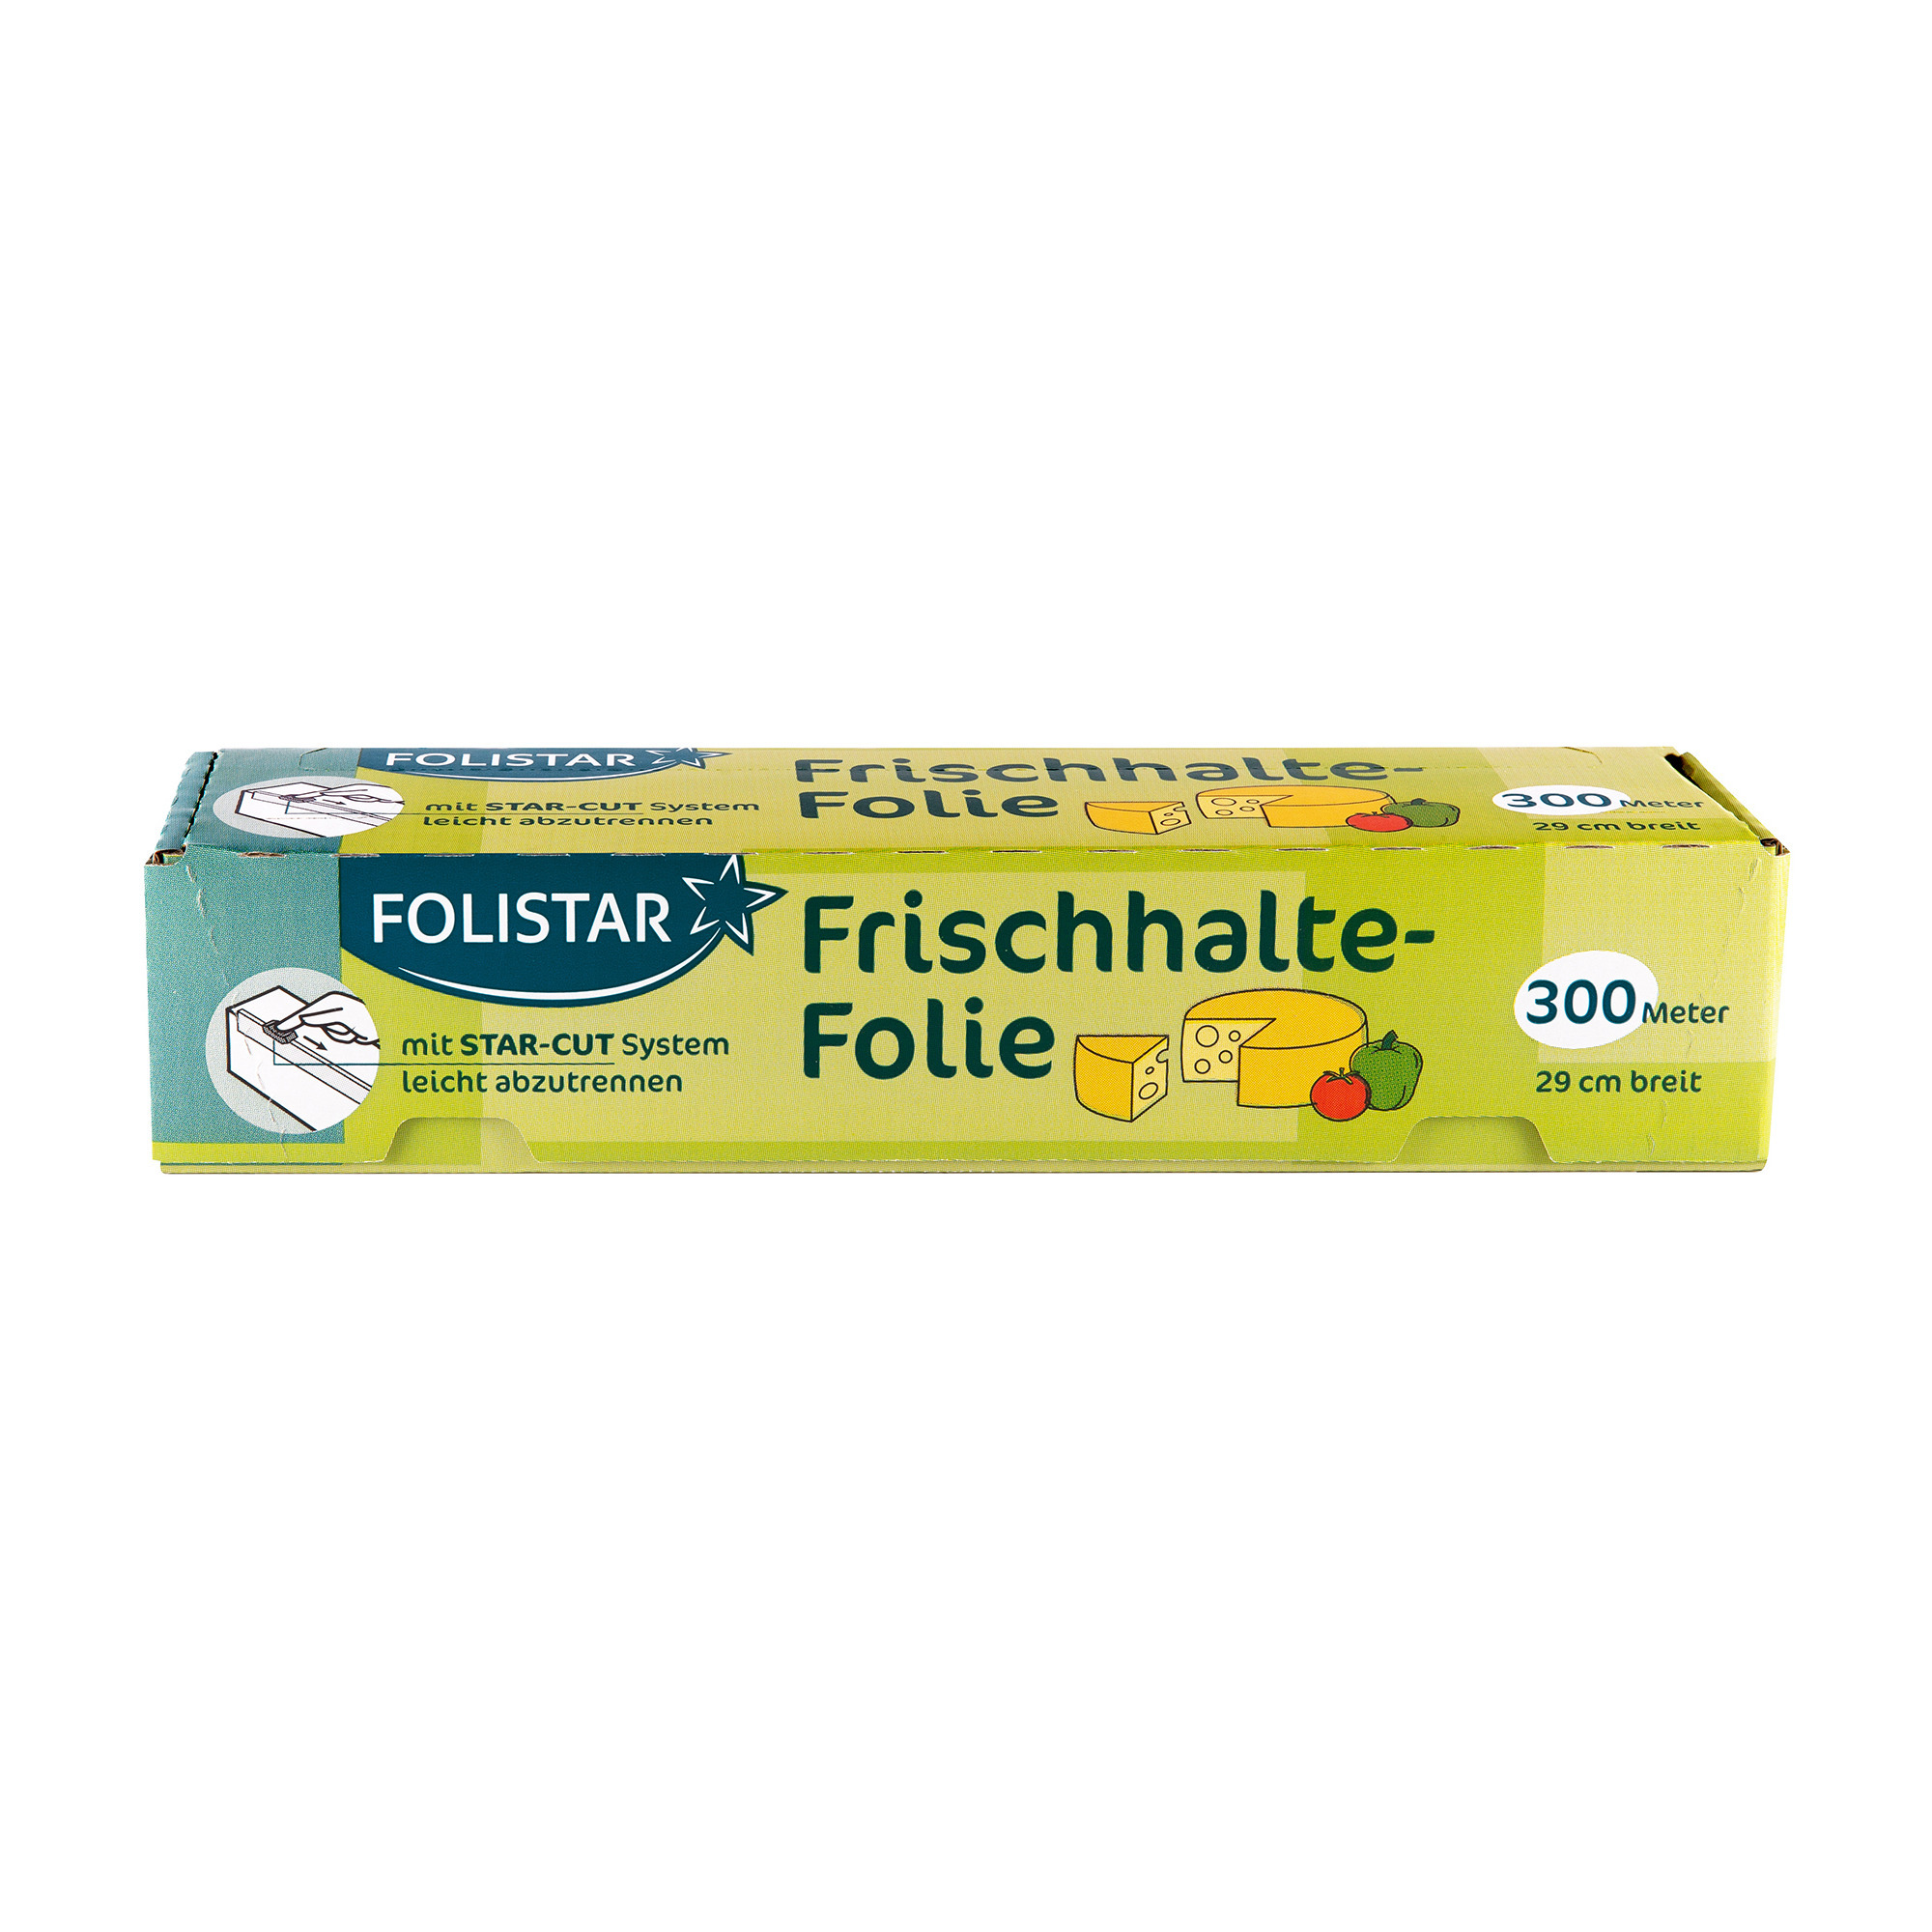 Folistar Frischhaltefolie 300mx29cm